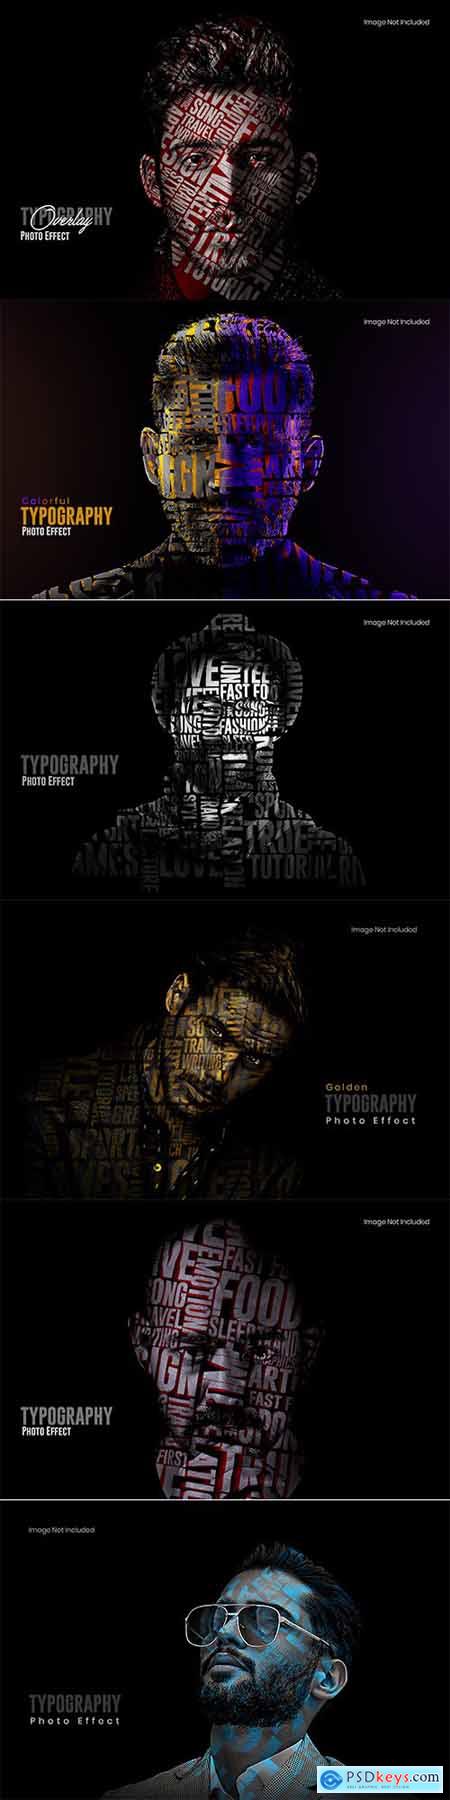 Typography portrait effect template